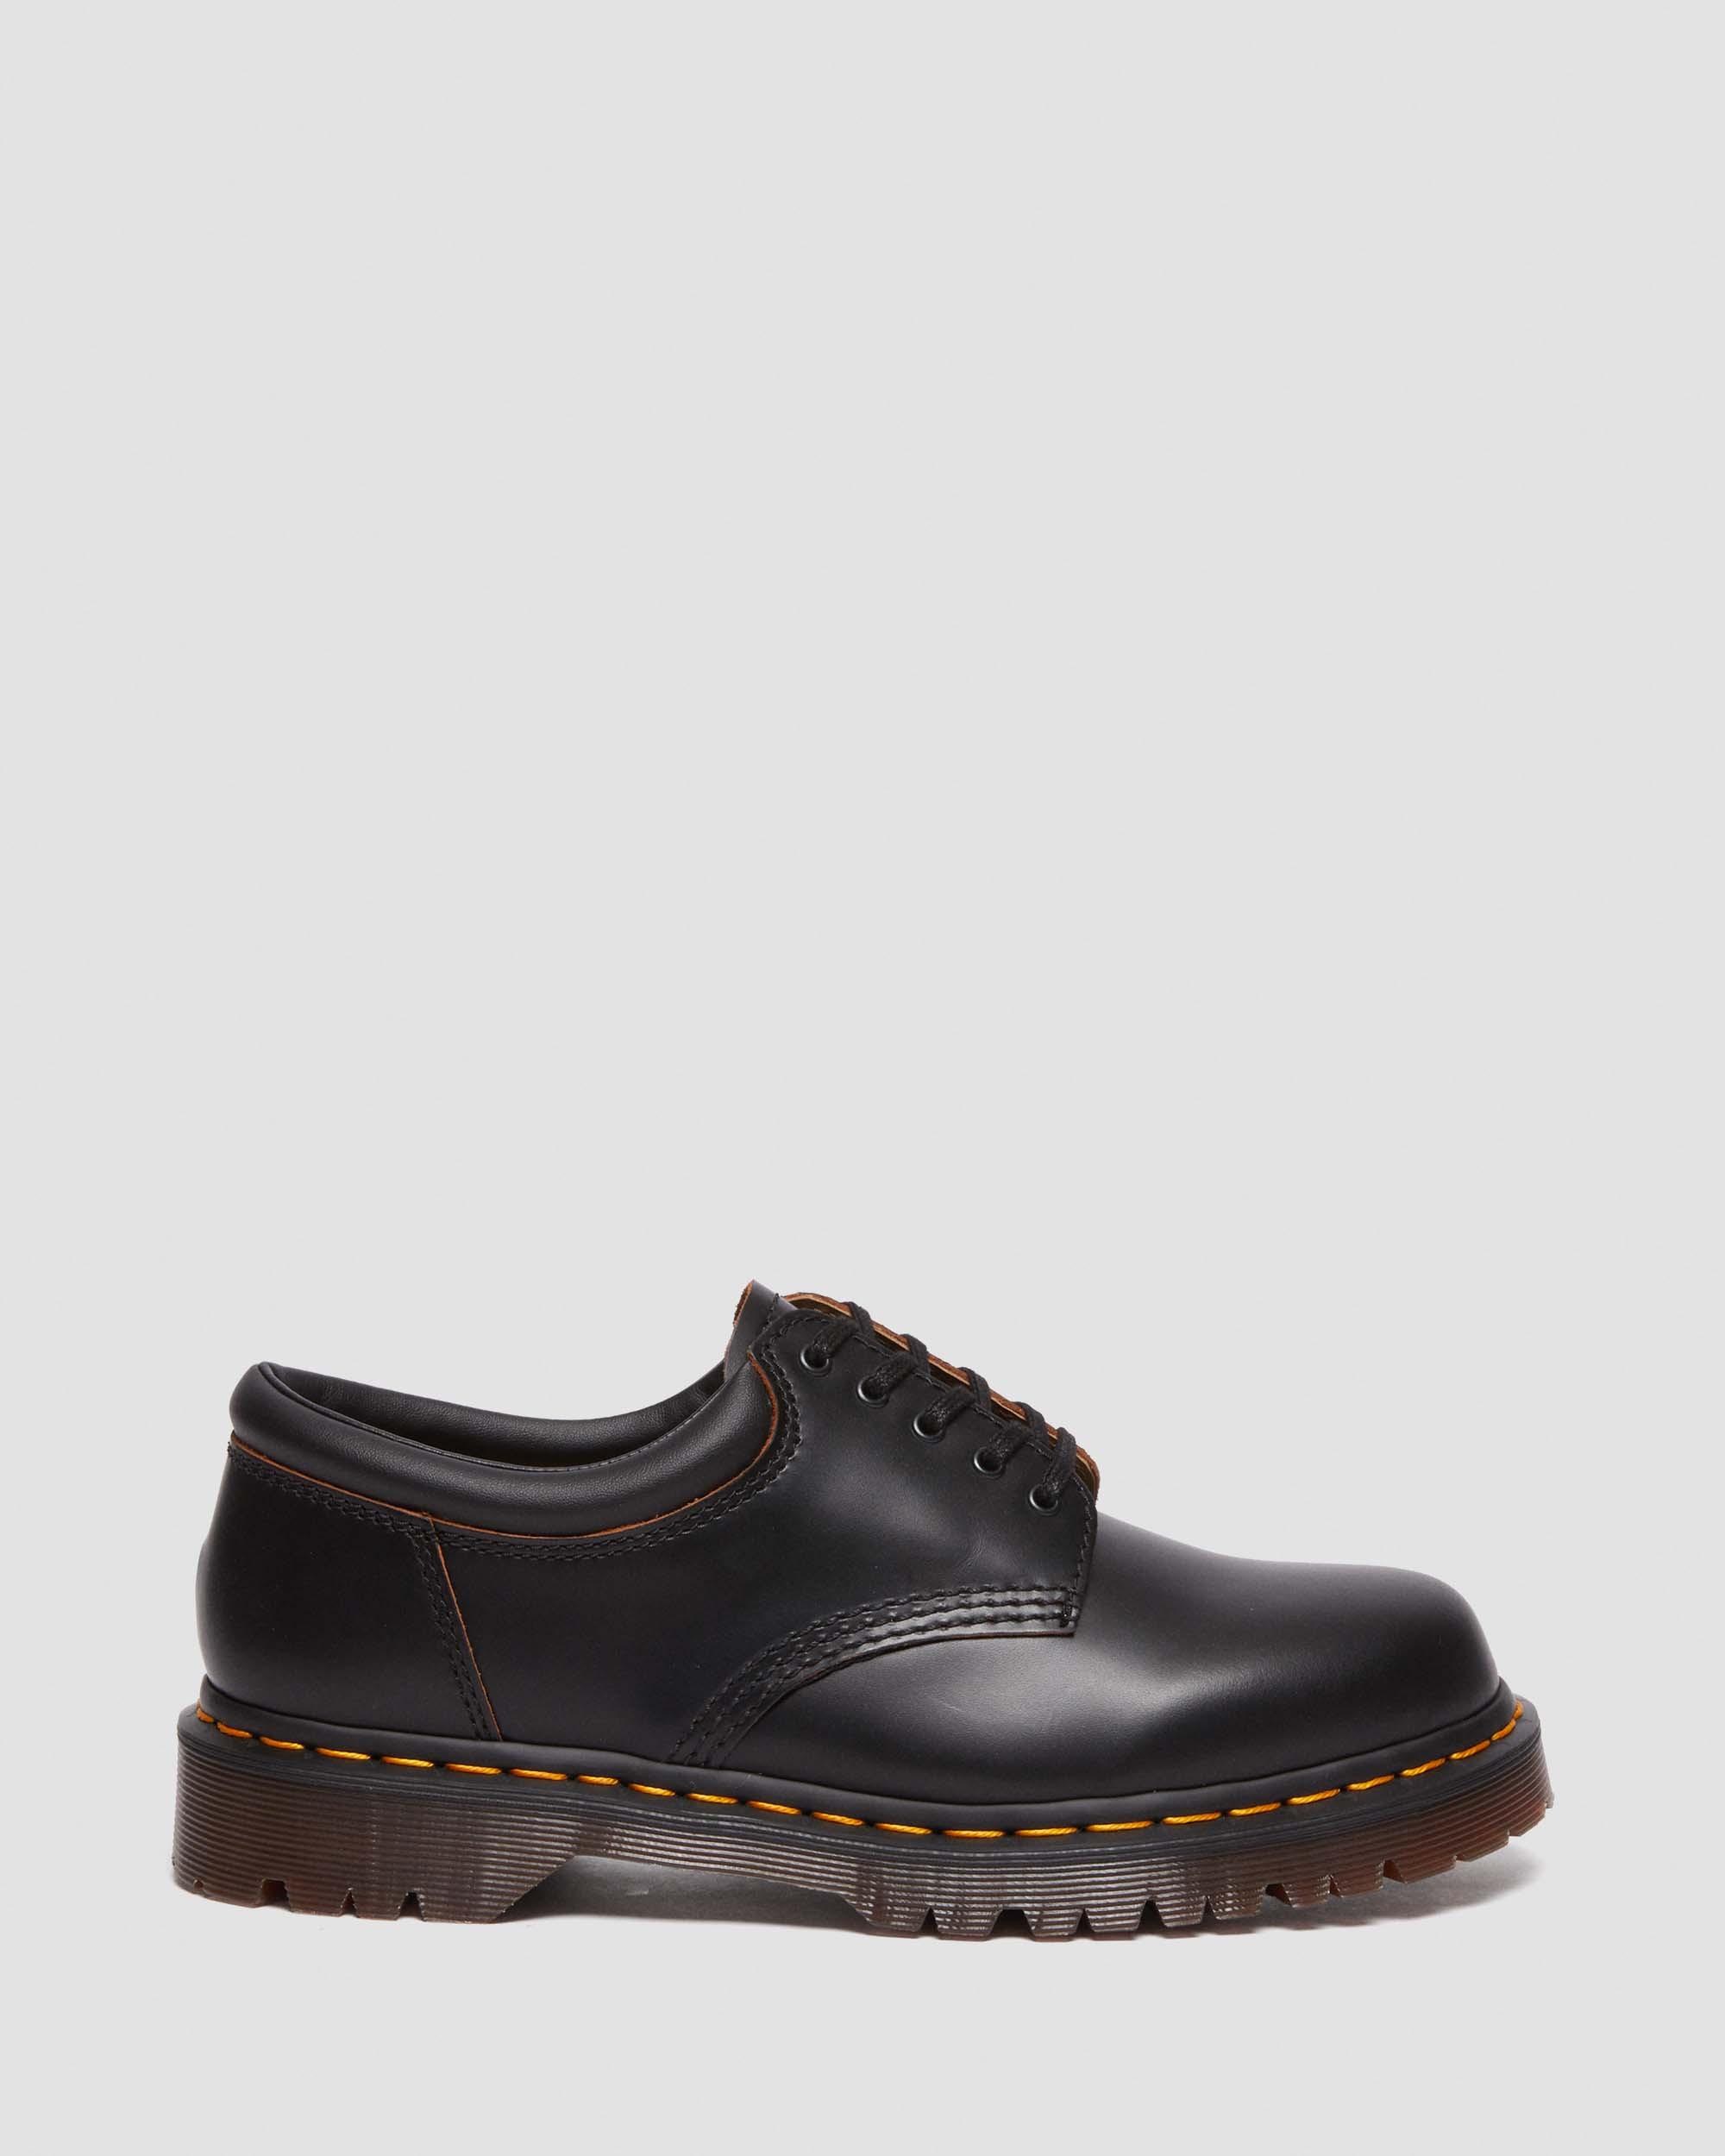 8053 Vintage Smooth Leather Oxford Shoes in Black | Dr. Martens